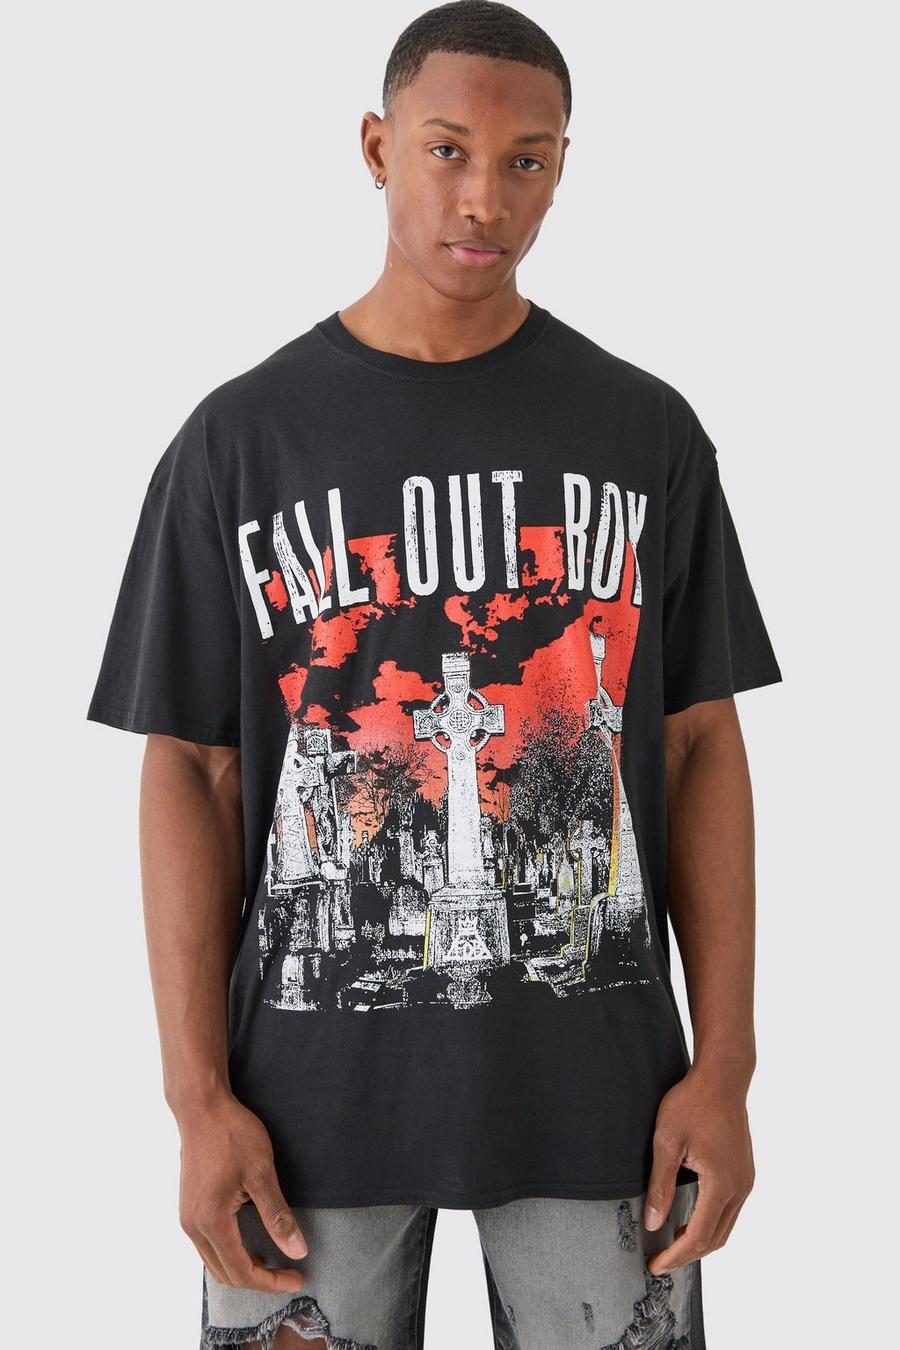 Black Oversized Boxy Fall Out Boy Band License T-shirt